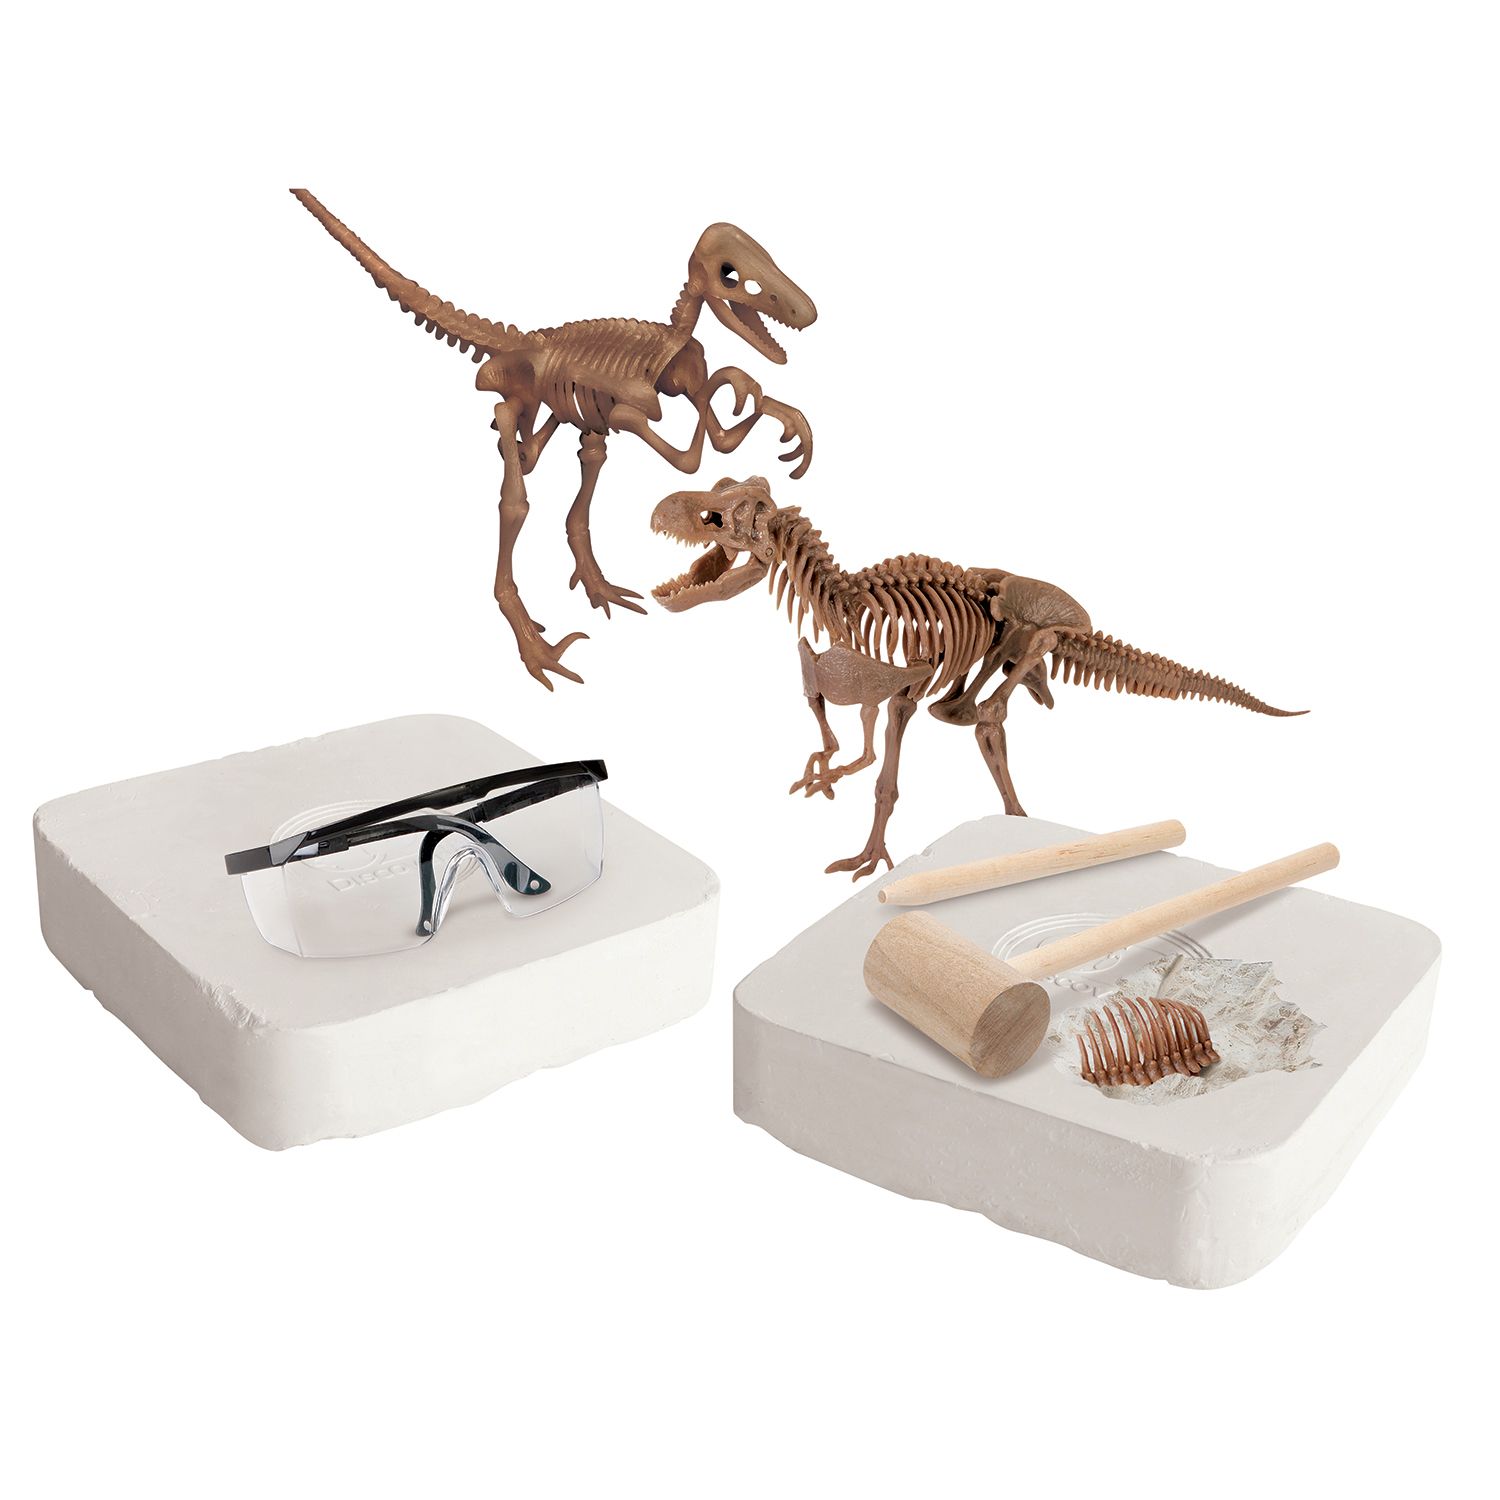 dinosaur toy skeleton fossil excavation